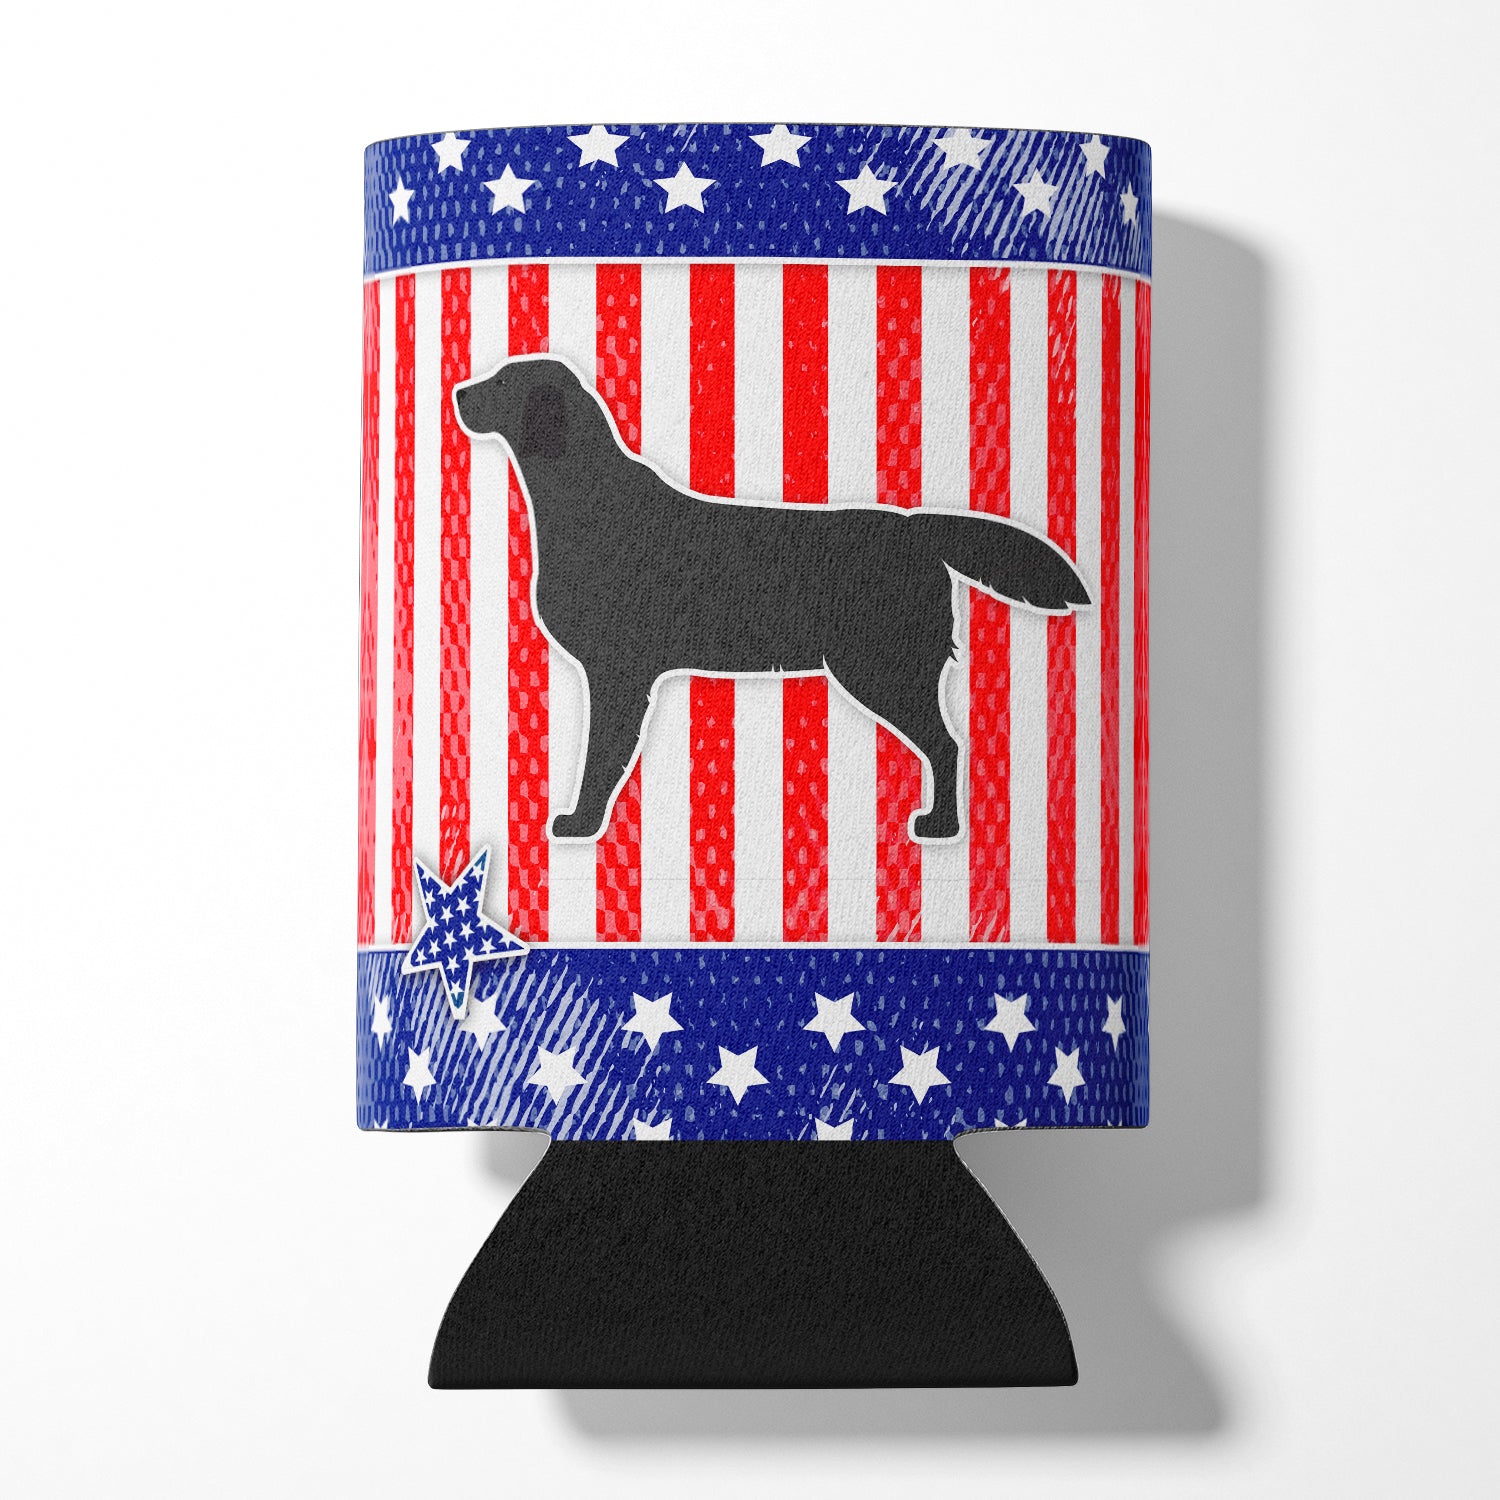 USA Patriotic Black Labrador Retriever Can ou Bottle Hugger BB3308CC